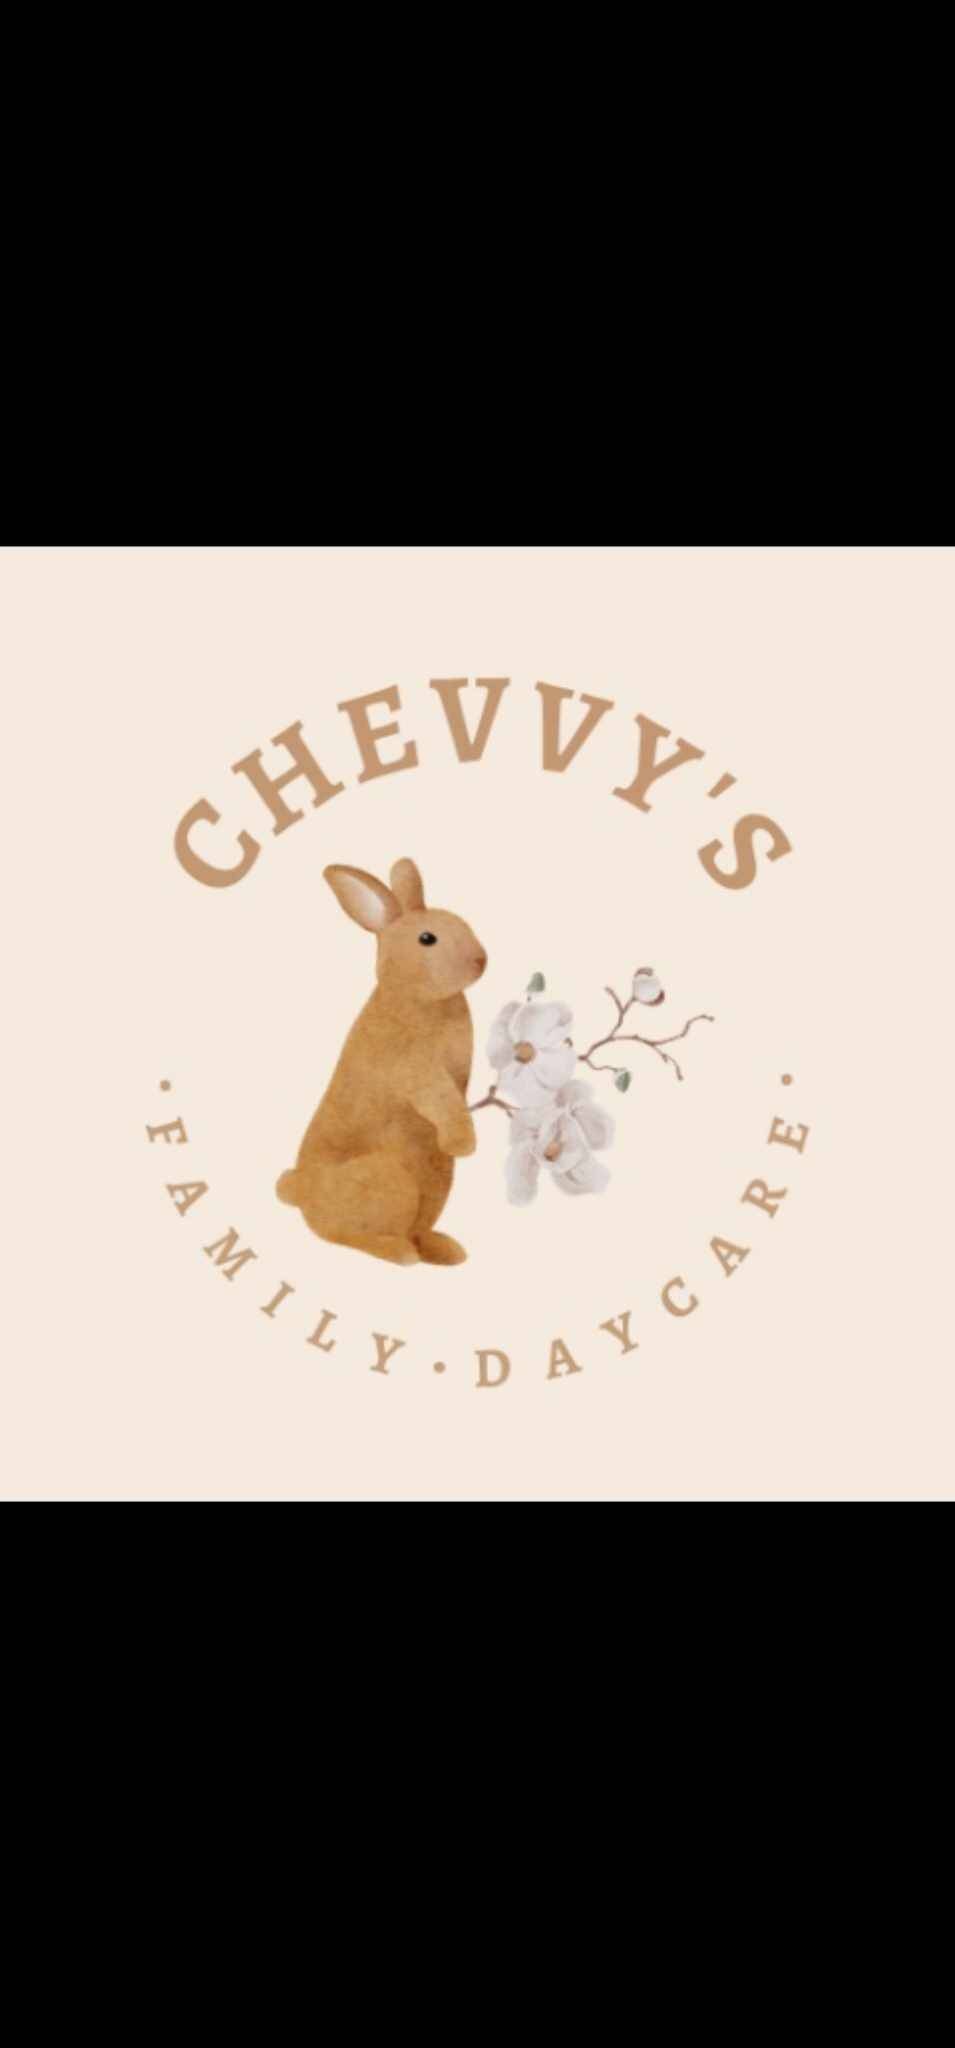 Chevvy's Family Day Care